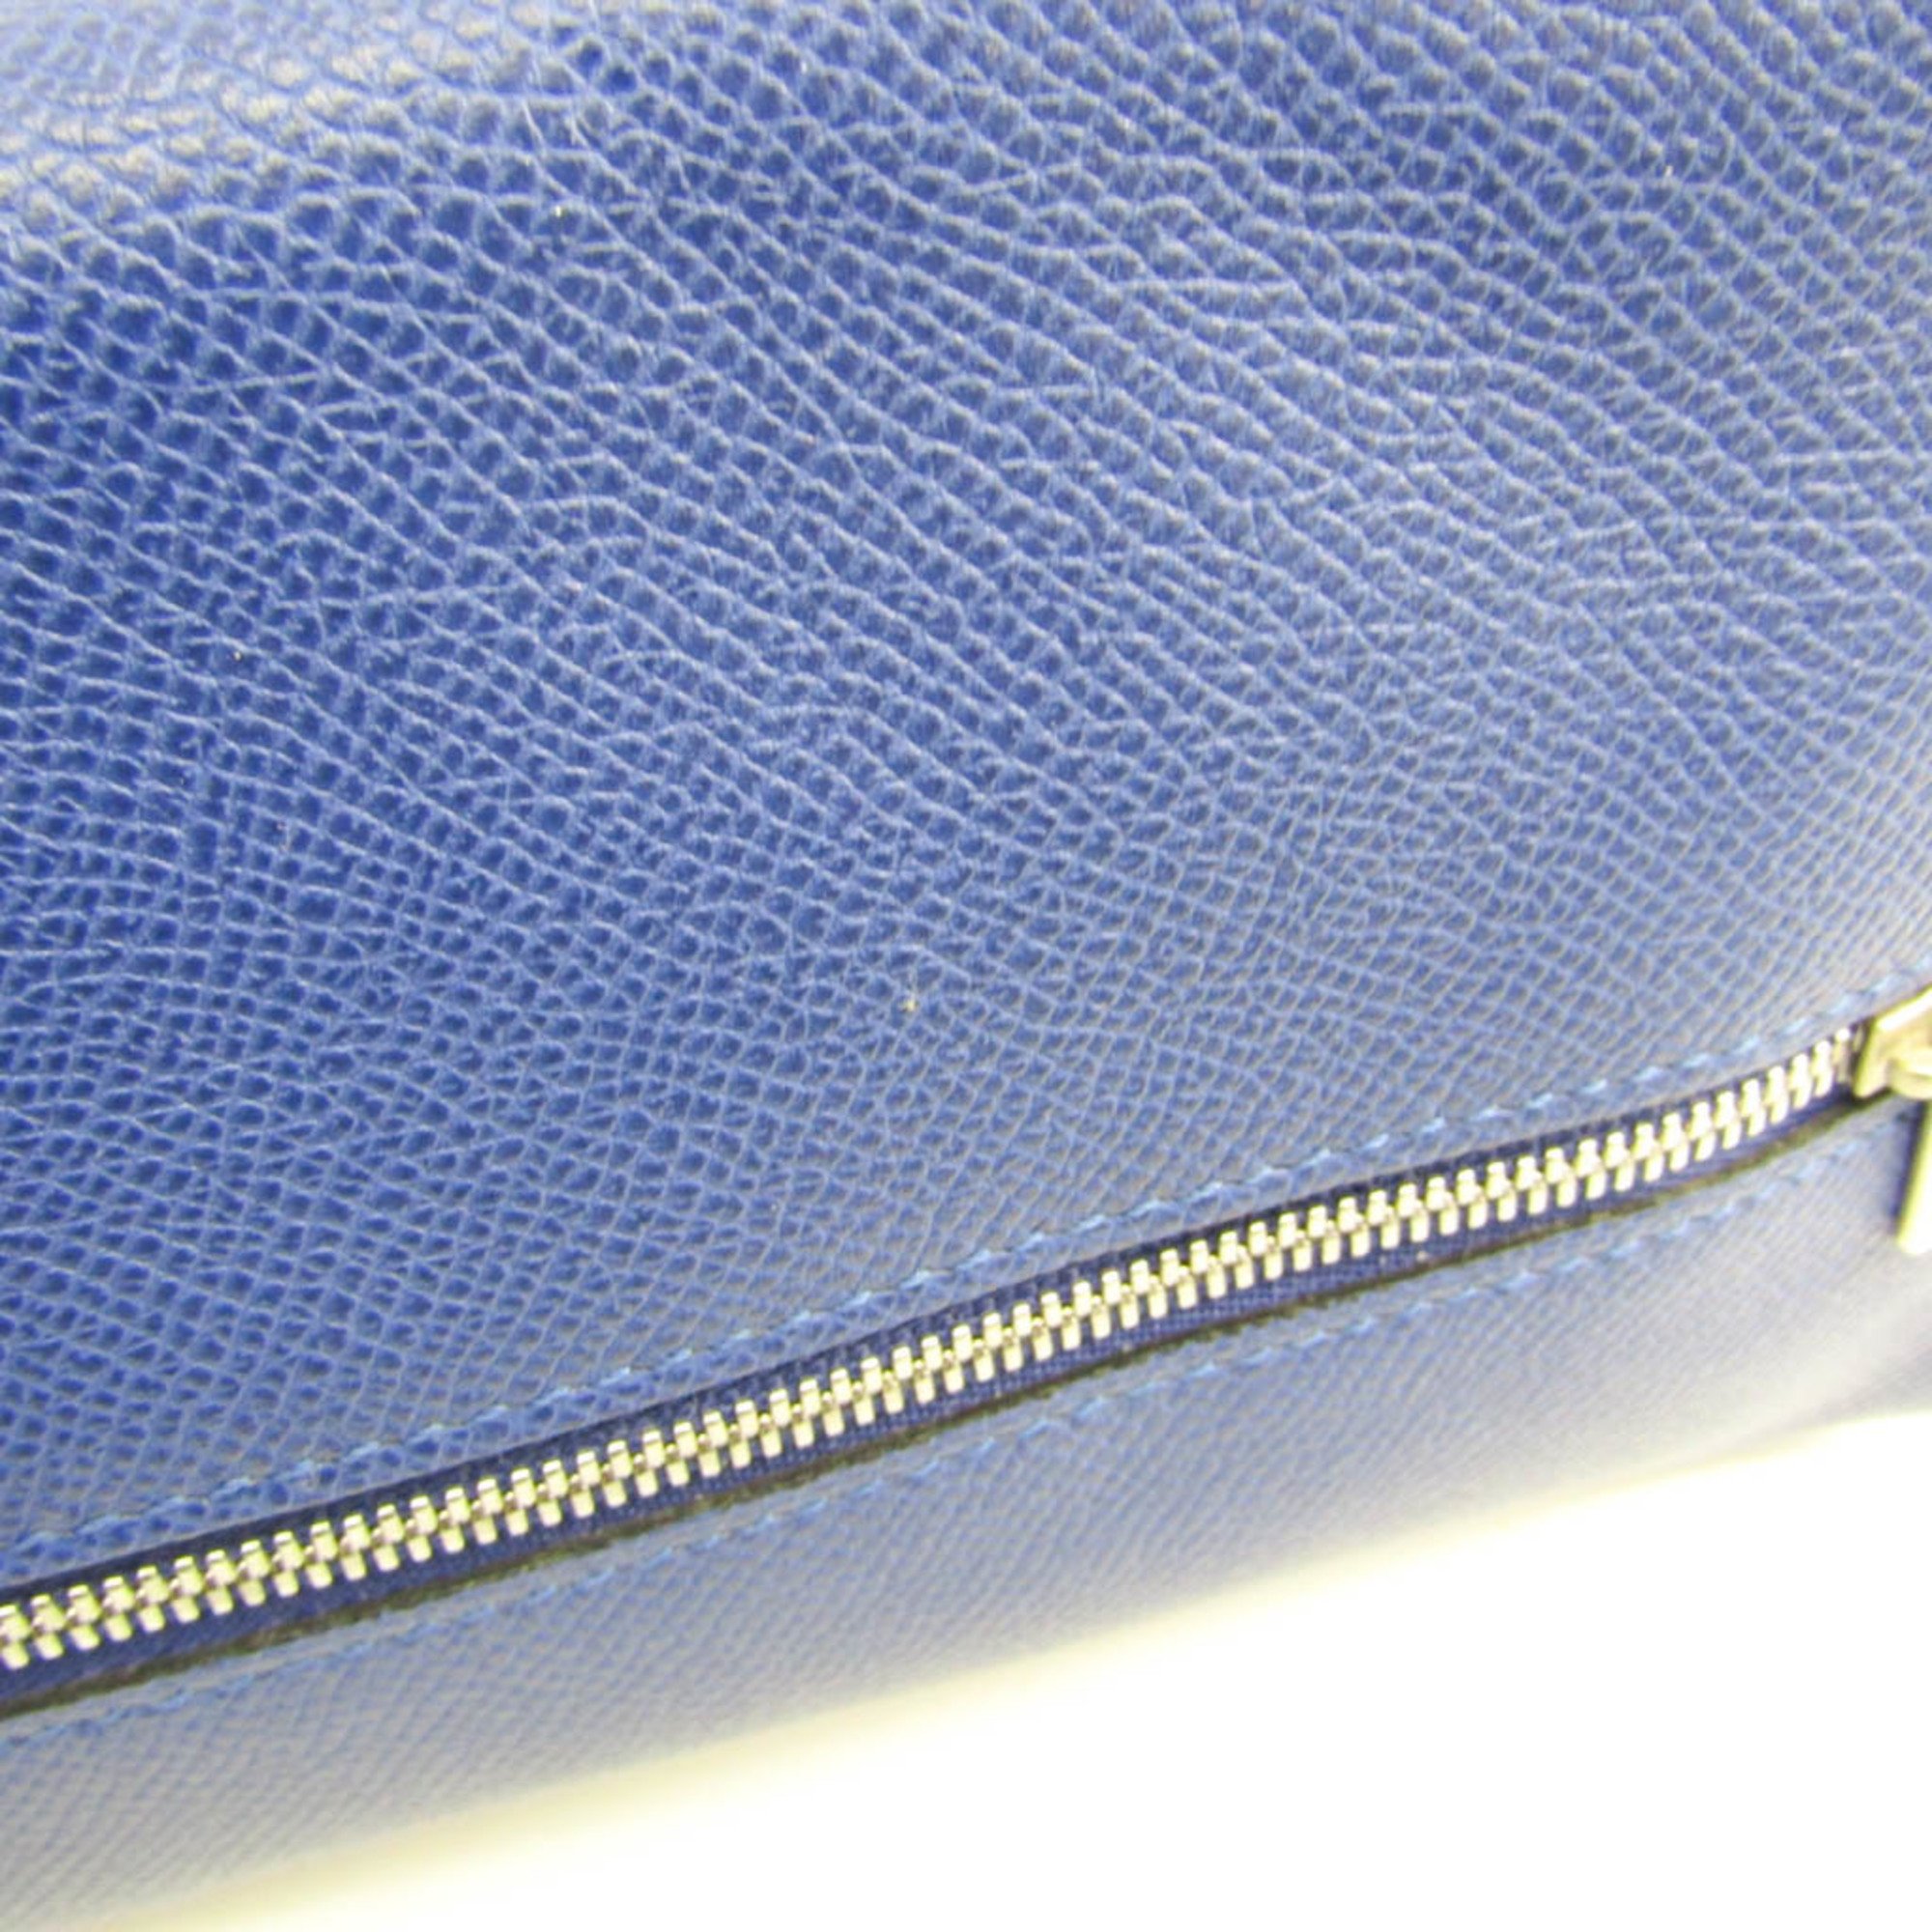 Valextra Large Beauty Case V6A68 Unisex Leather Clutch Bag,Pouch Royal Blue